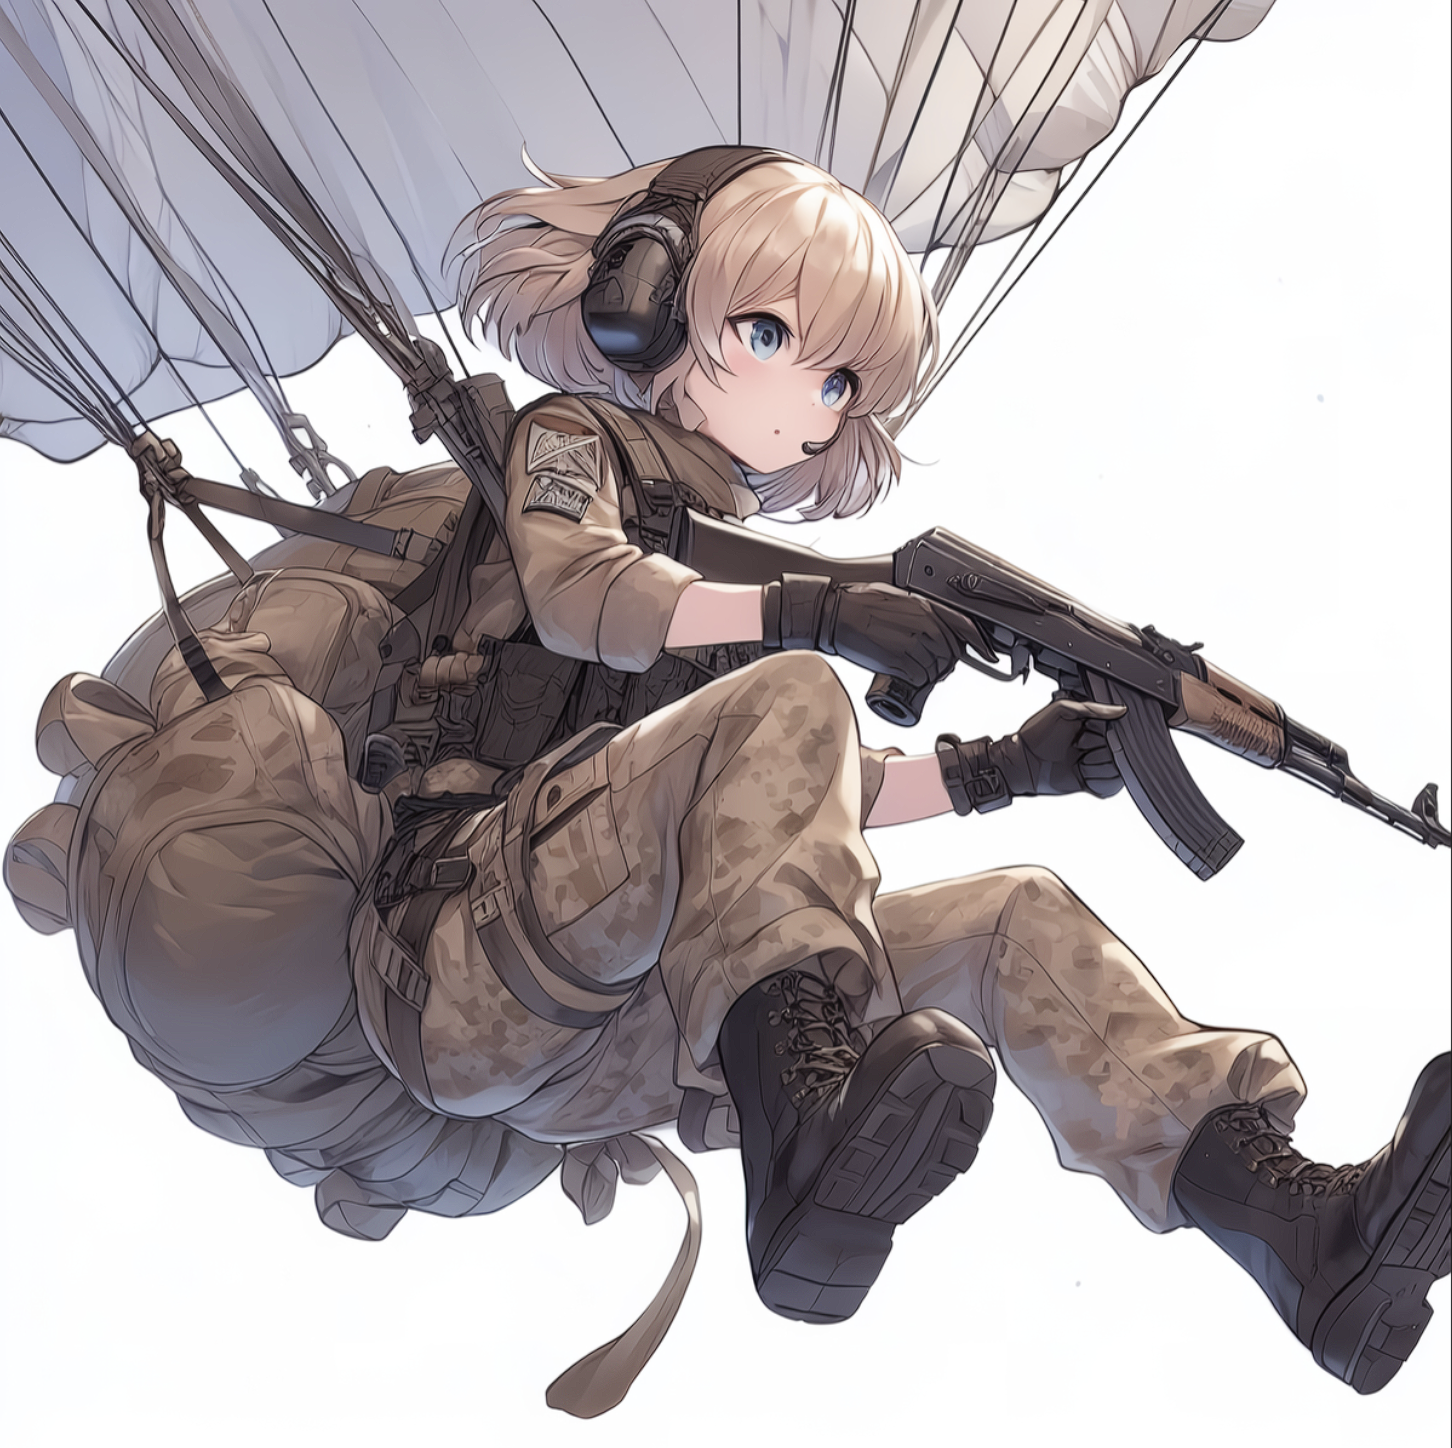 Anime 1452x1448 anime anime girls AI art digital art parachutes backpacks drag chute AK-47 girls with guns military headphones